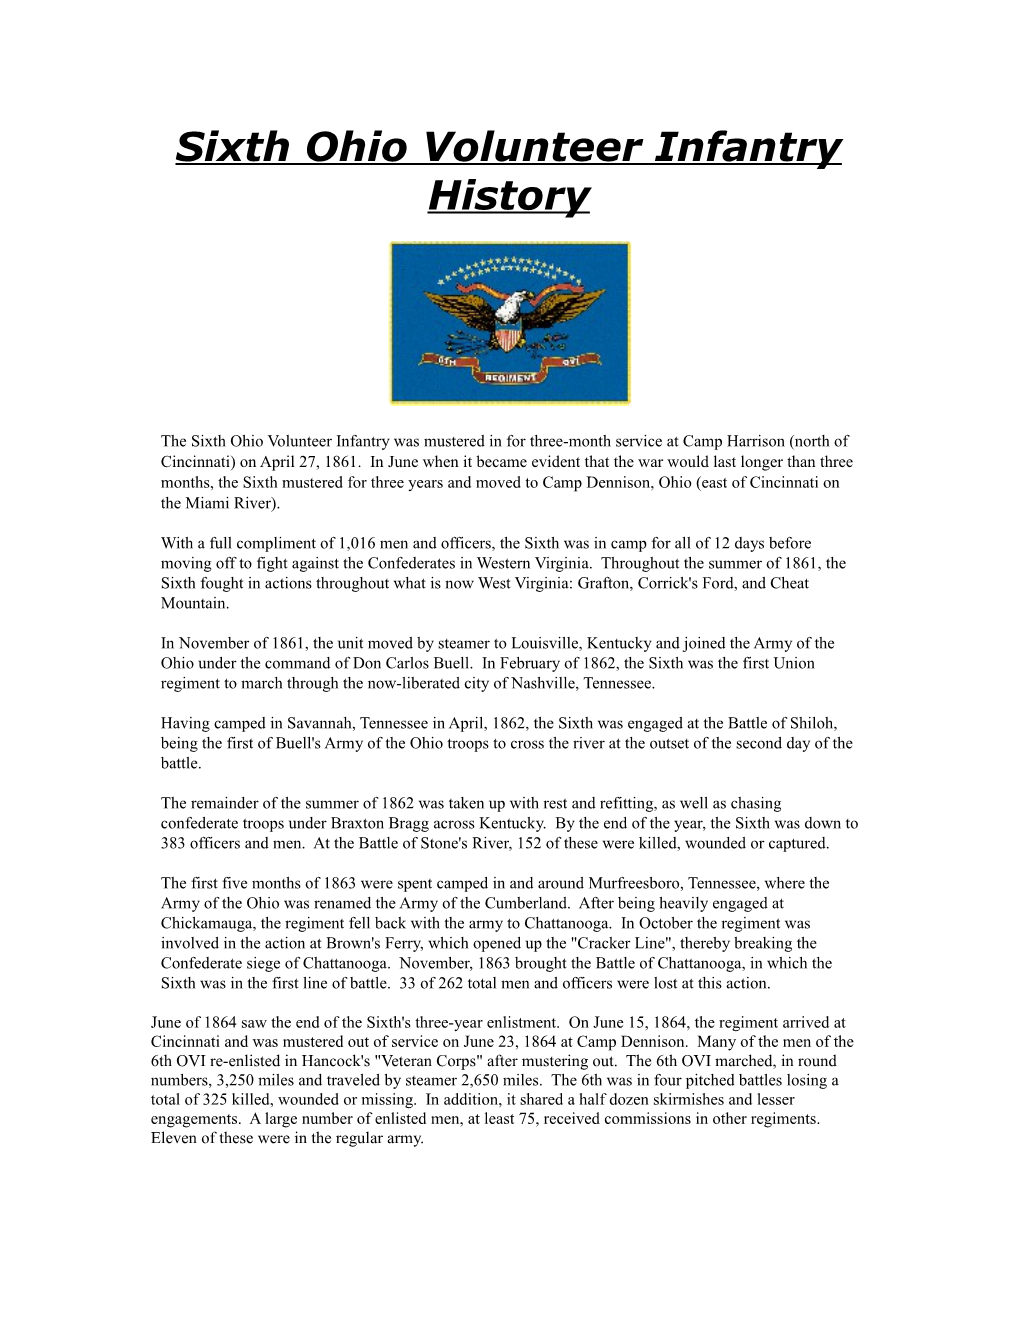 Sixth Ohio Volunteer Infantry History